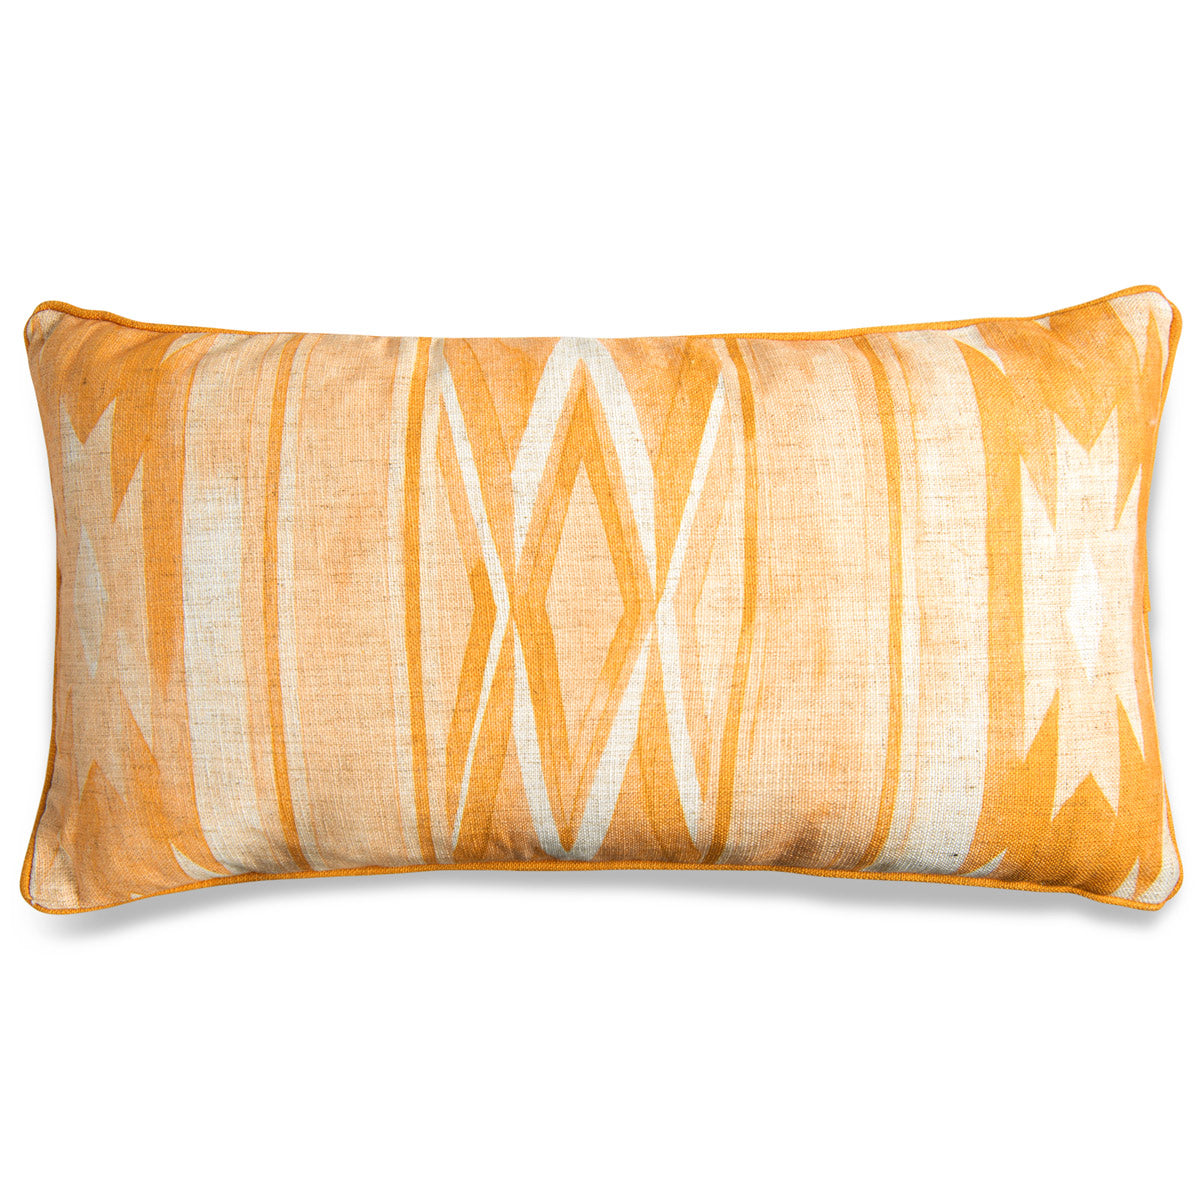 Southwest Lumbar Pillow in Mustard - ModShop1.com